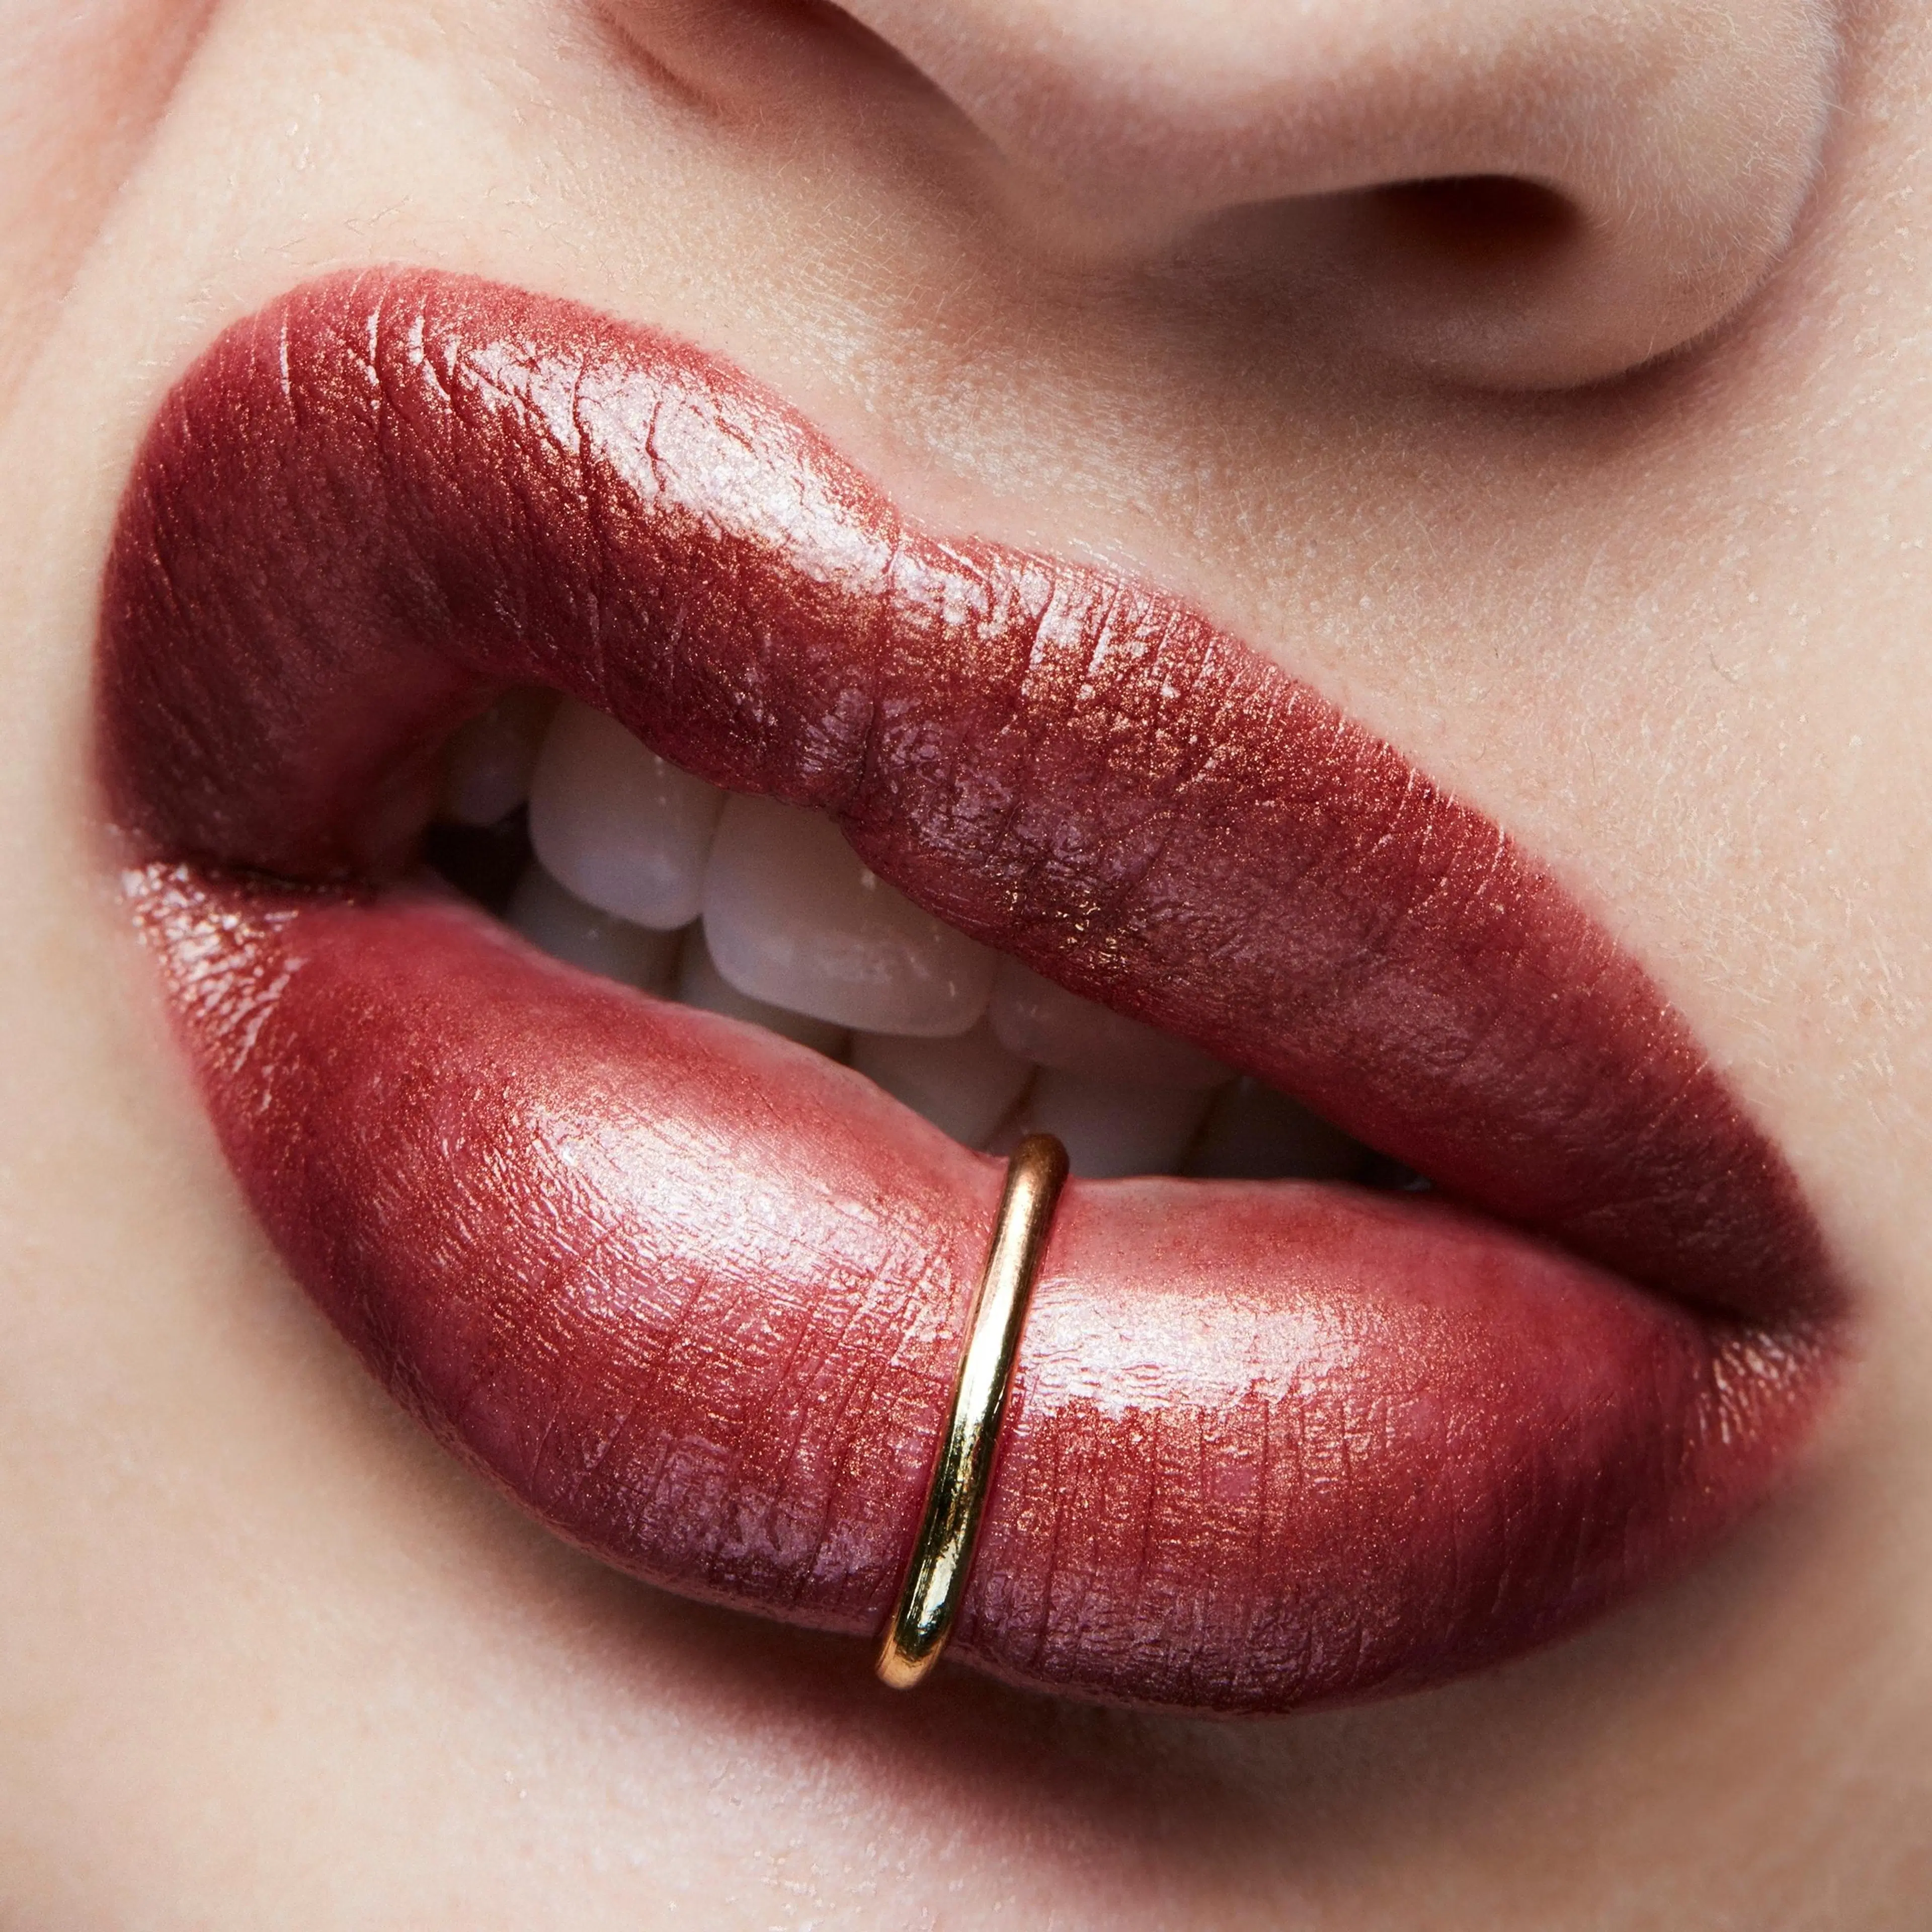 MAC Frost Lipstick huulipuna 3g